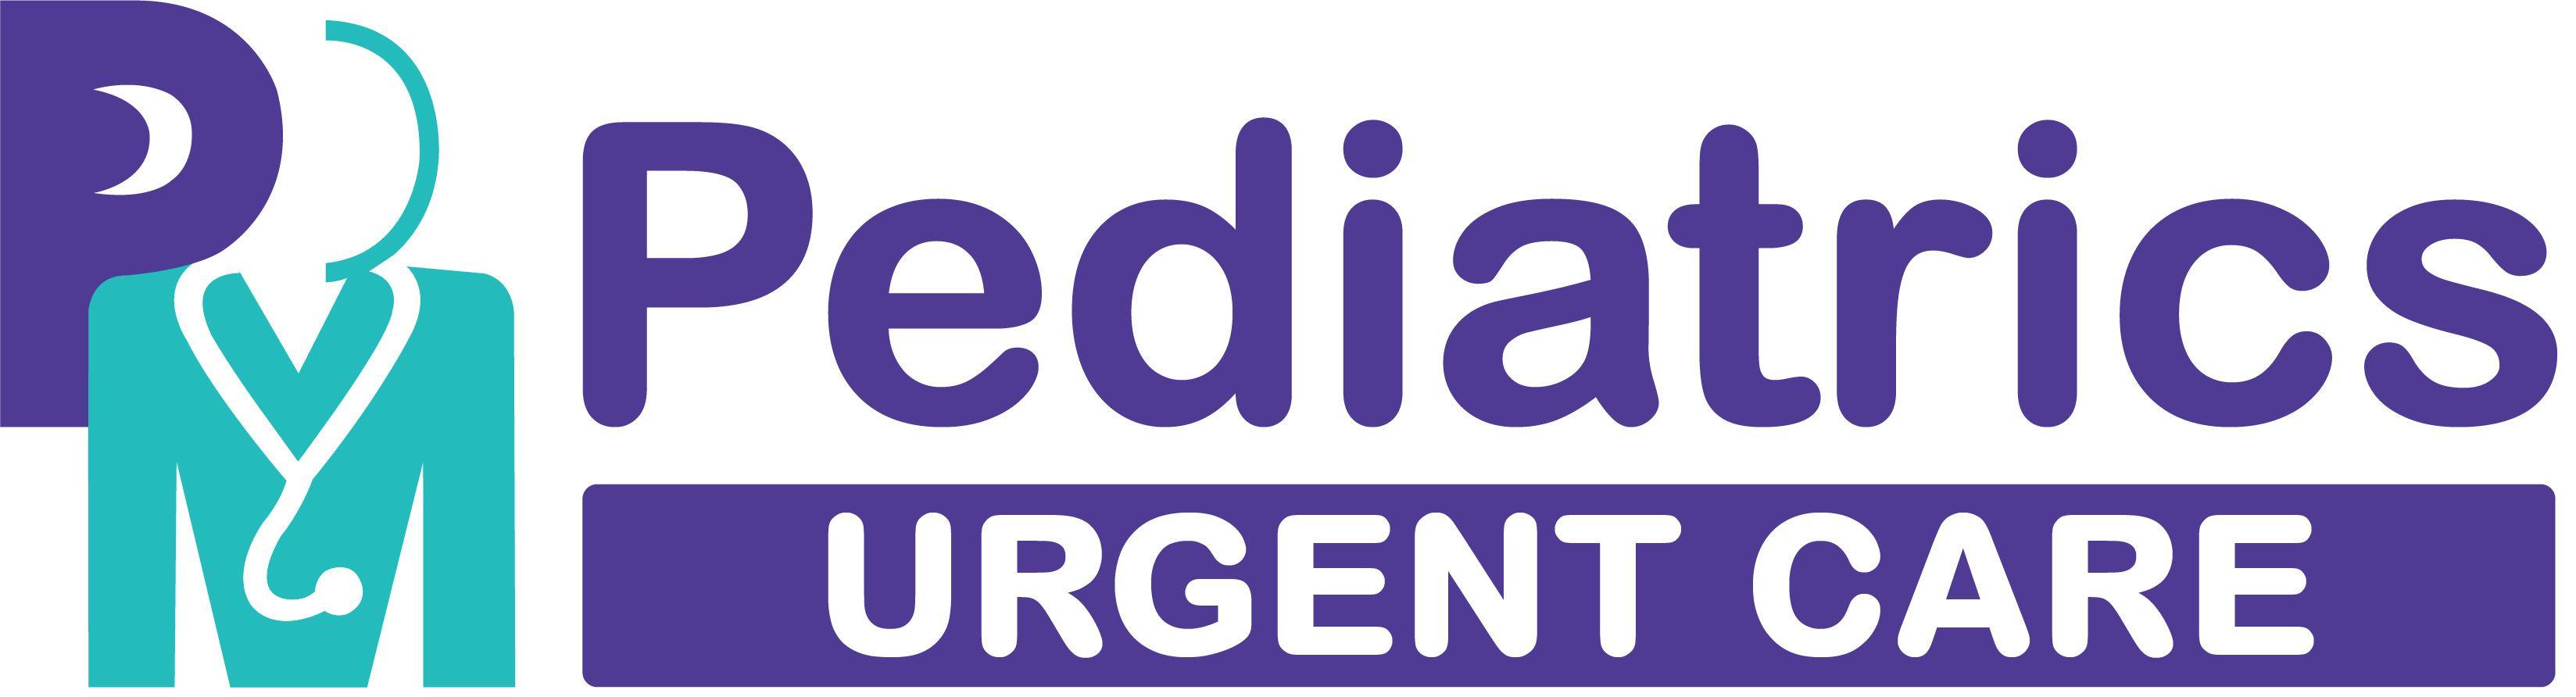 Pediatrics Logo - PM Pediatrics | Urgent Care for Kids of All Ages